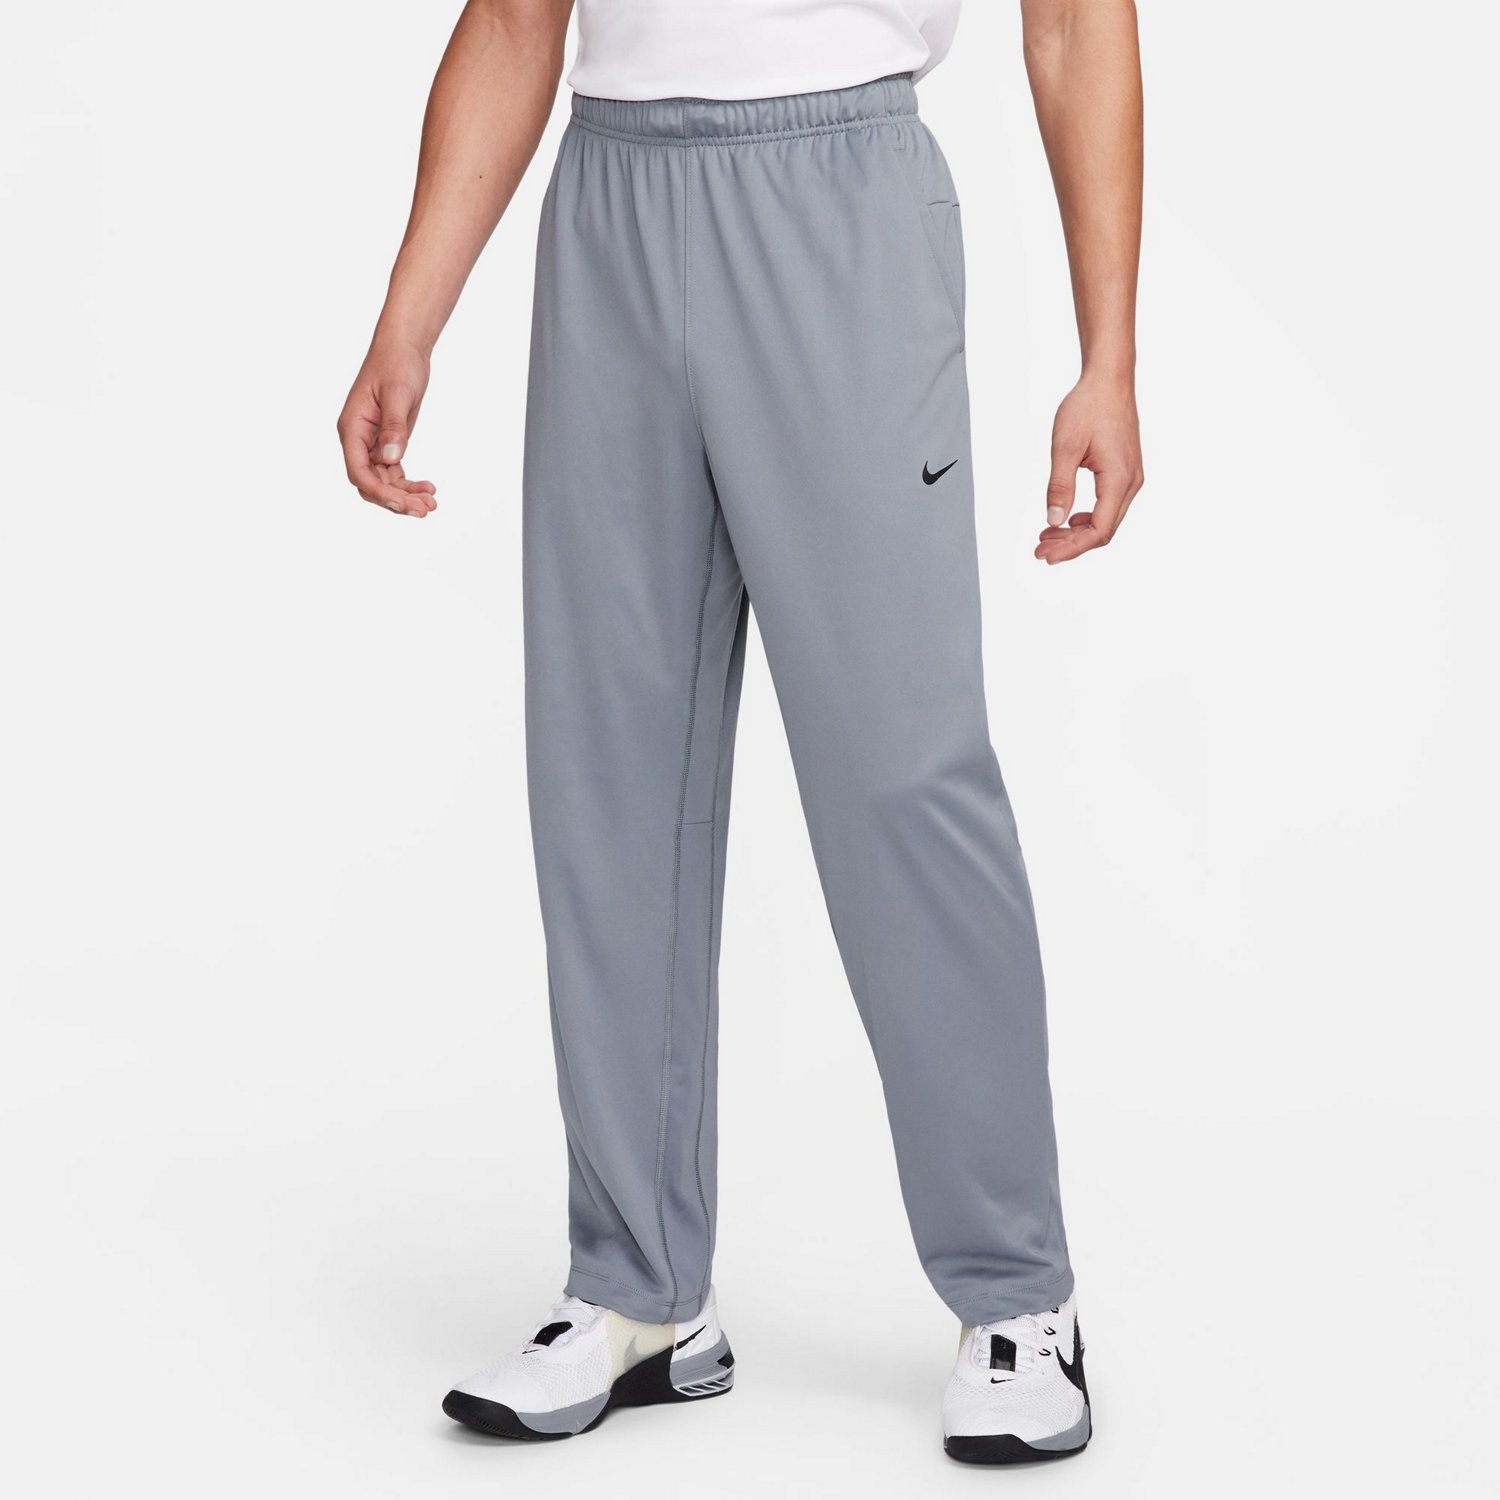 Nike Training pants DRI-FIT TOTALITY in black